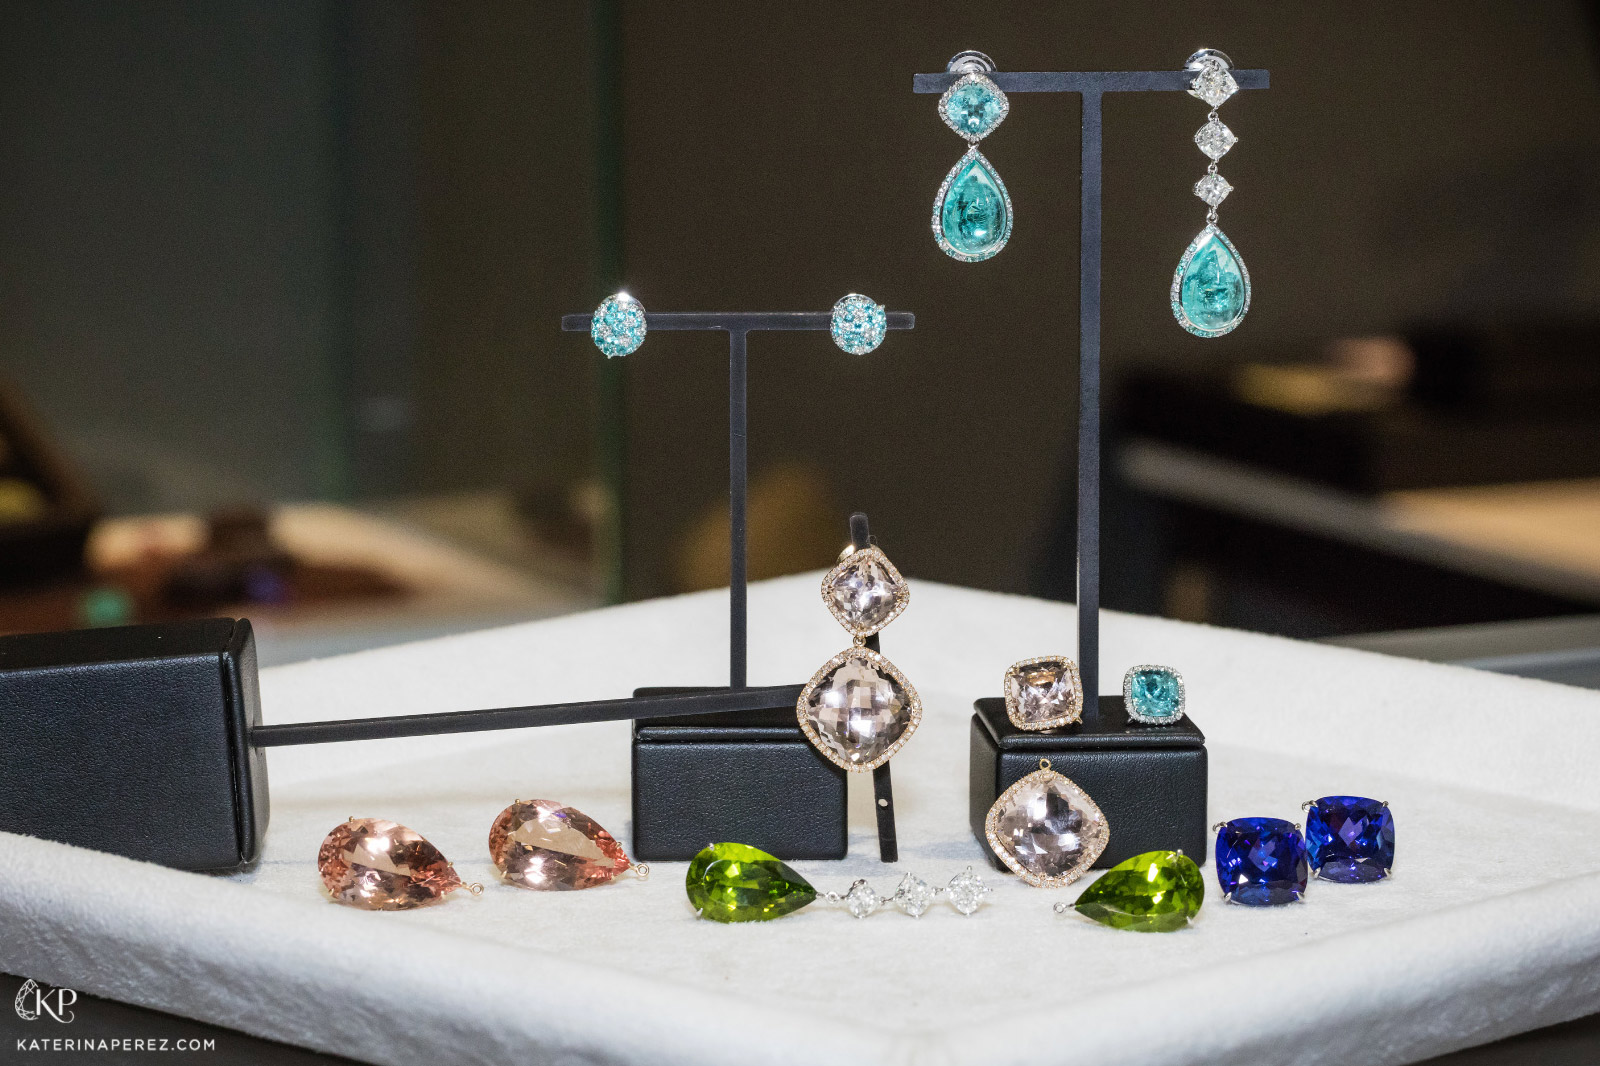 A selection of Doris Hangartner gemstone jewellery in Paraiba tourmaline, morganite, peridot, and tanzanite 